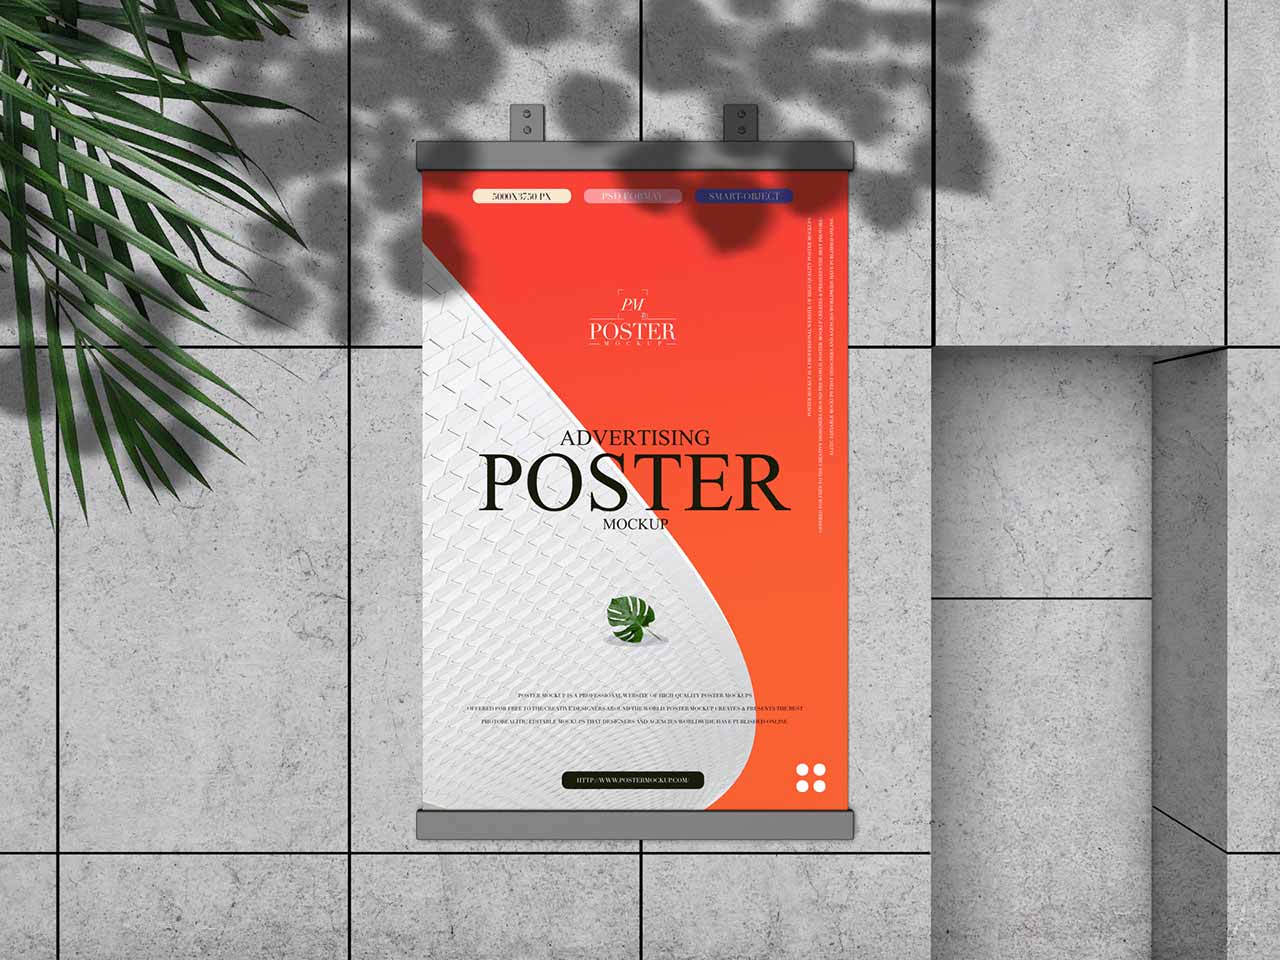 Download 50 Free Poster Mockups Psd Templates On Pixelbuddha